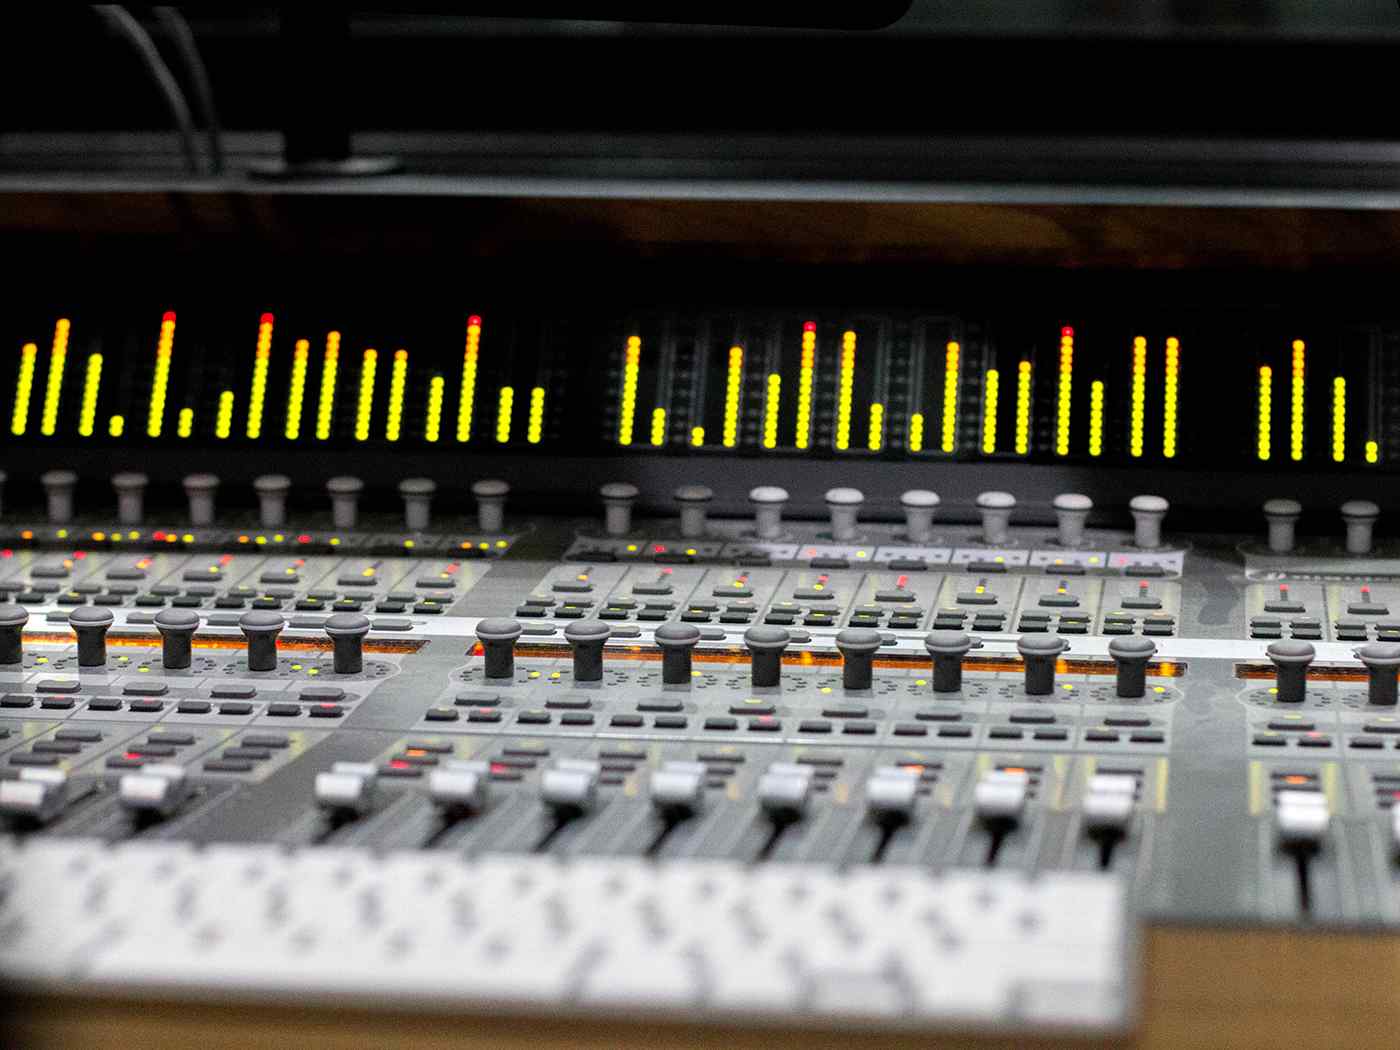 Recording music on control desk.